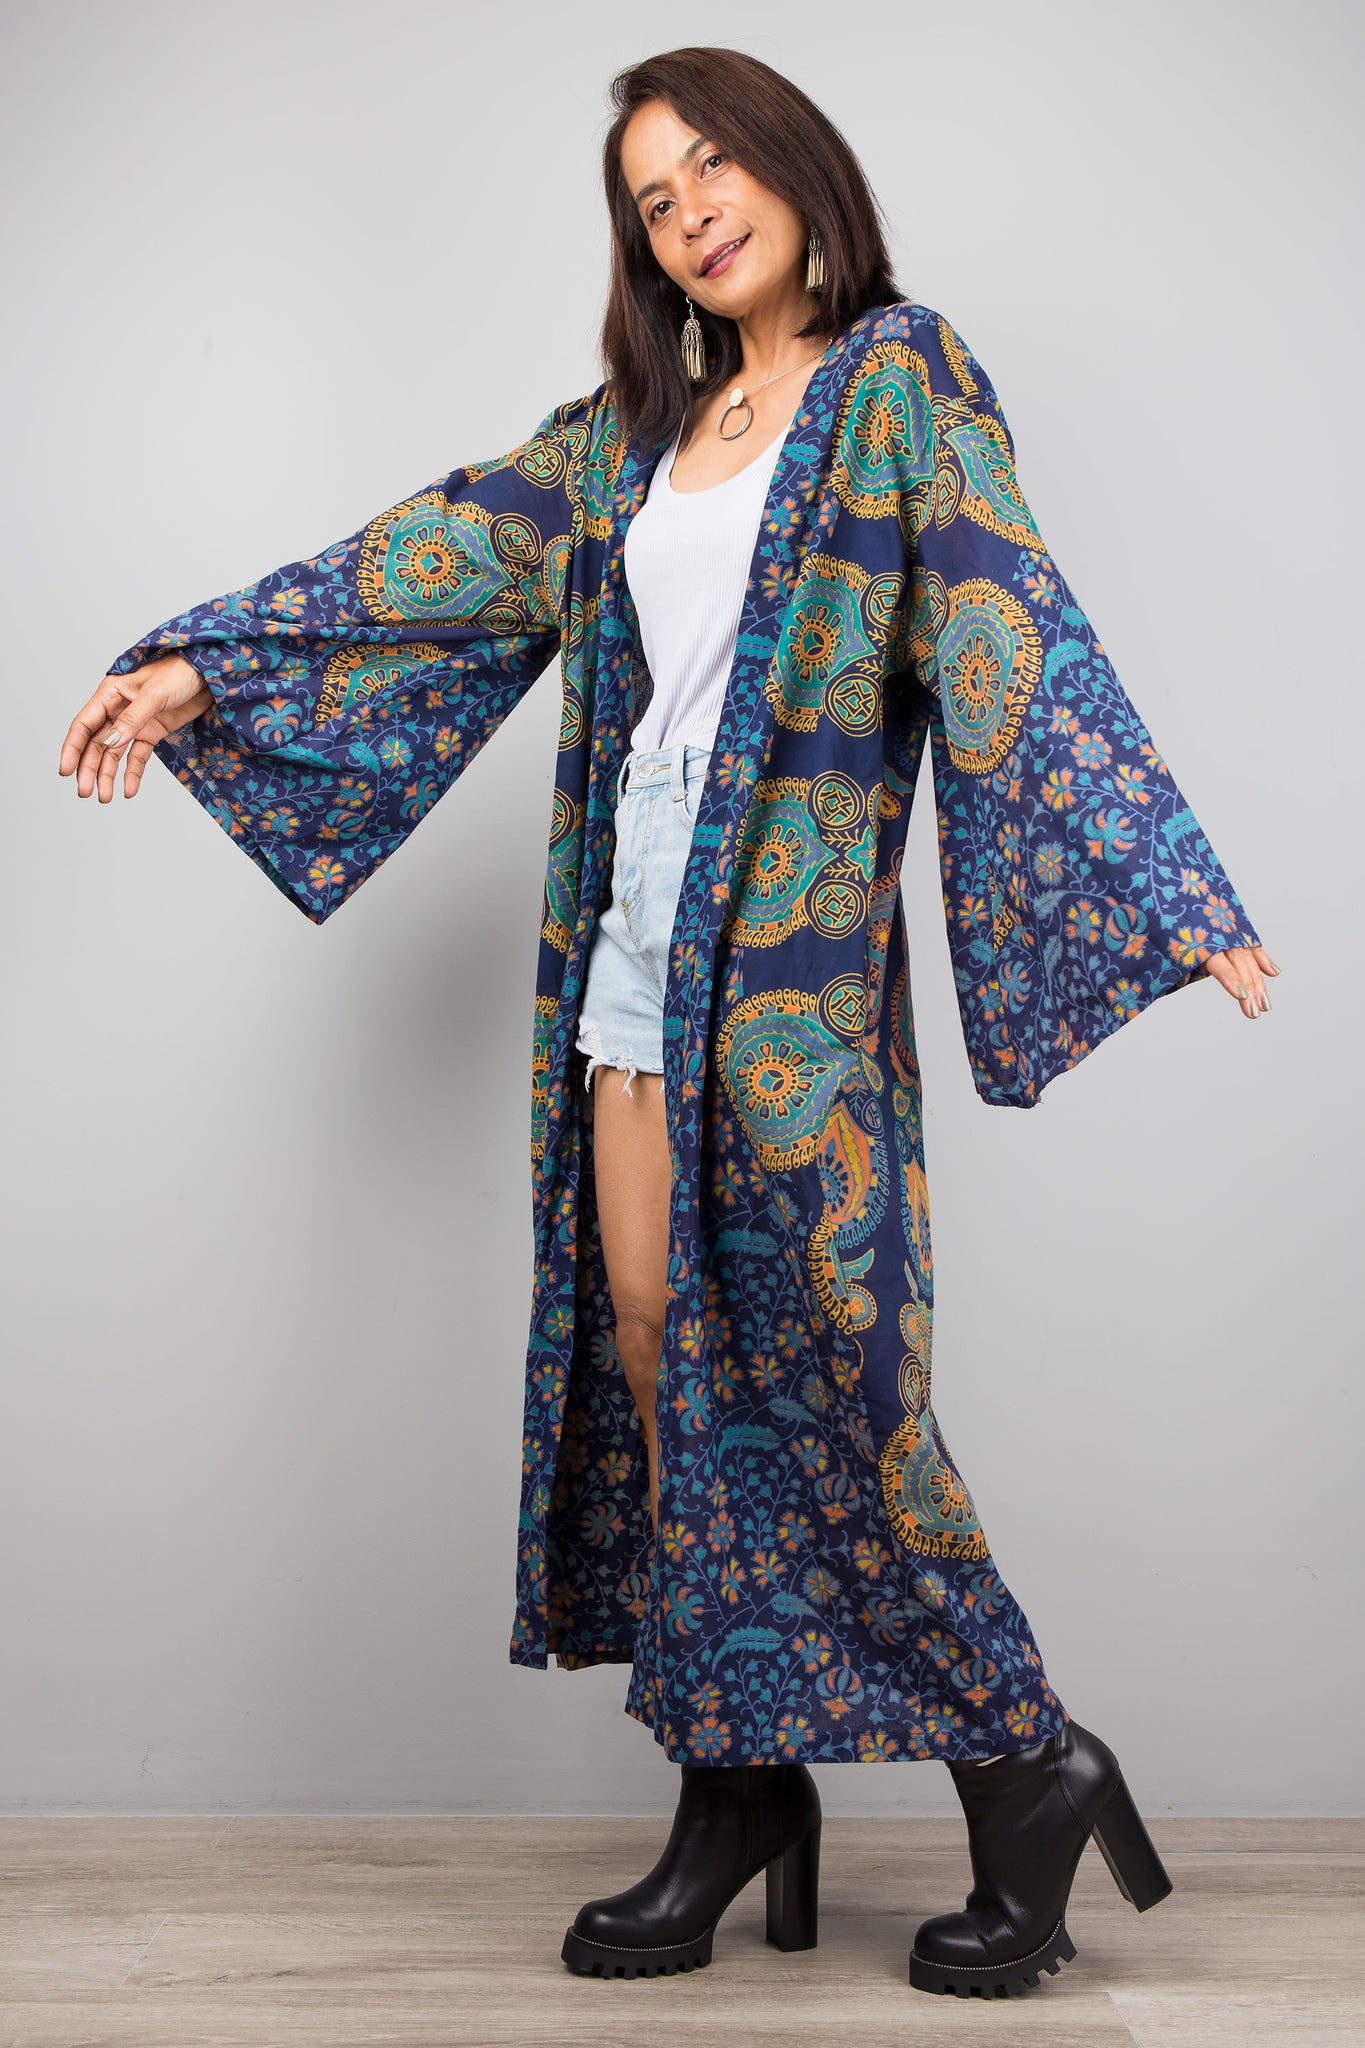 Dabi Handmade Kimono Weave Styled Patchwork Boho Festival Kimono Duster  Cardigan One Plus Size Cotton Special Gift Fall Spring Winter S-3X -   Canada